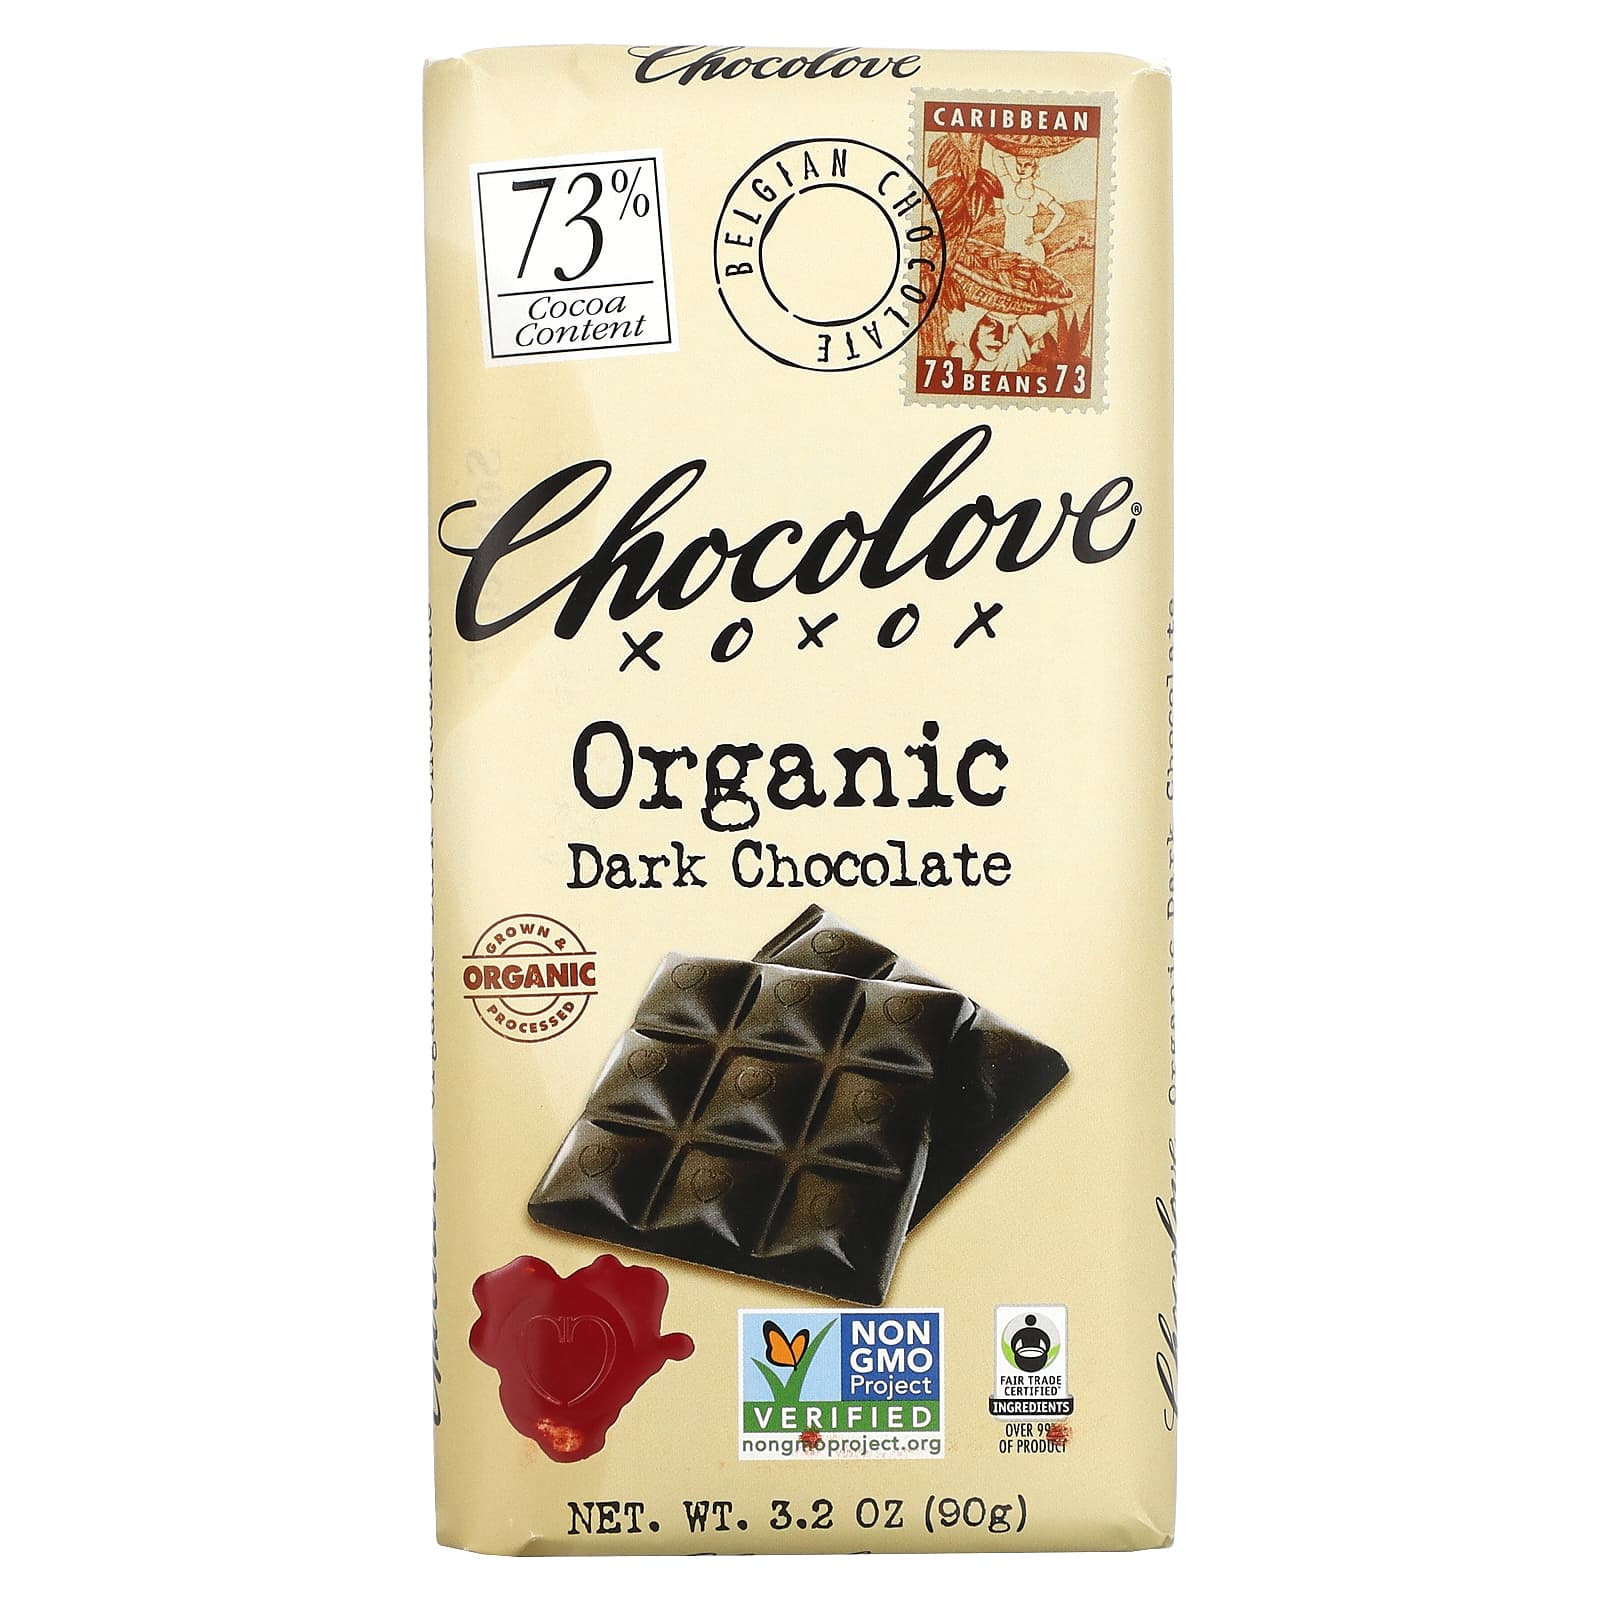 Chocolove, Organic Dark Chocolate Bar, 73% Cocoa, 3.2 oz (90 g)